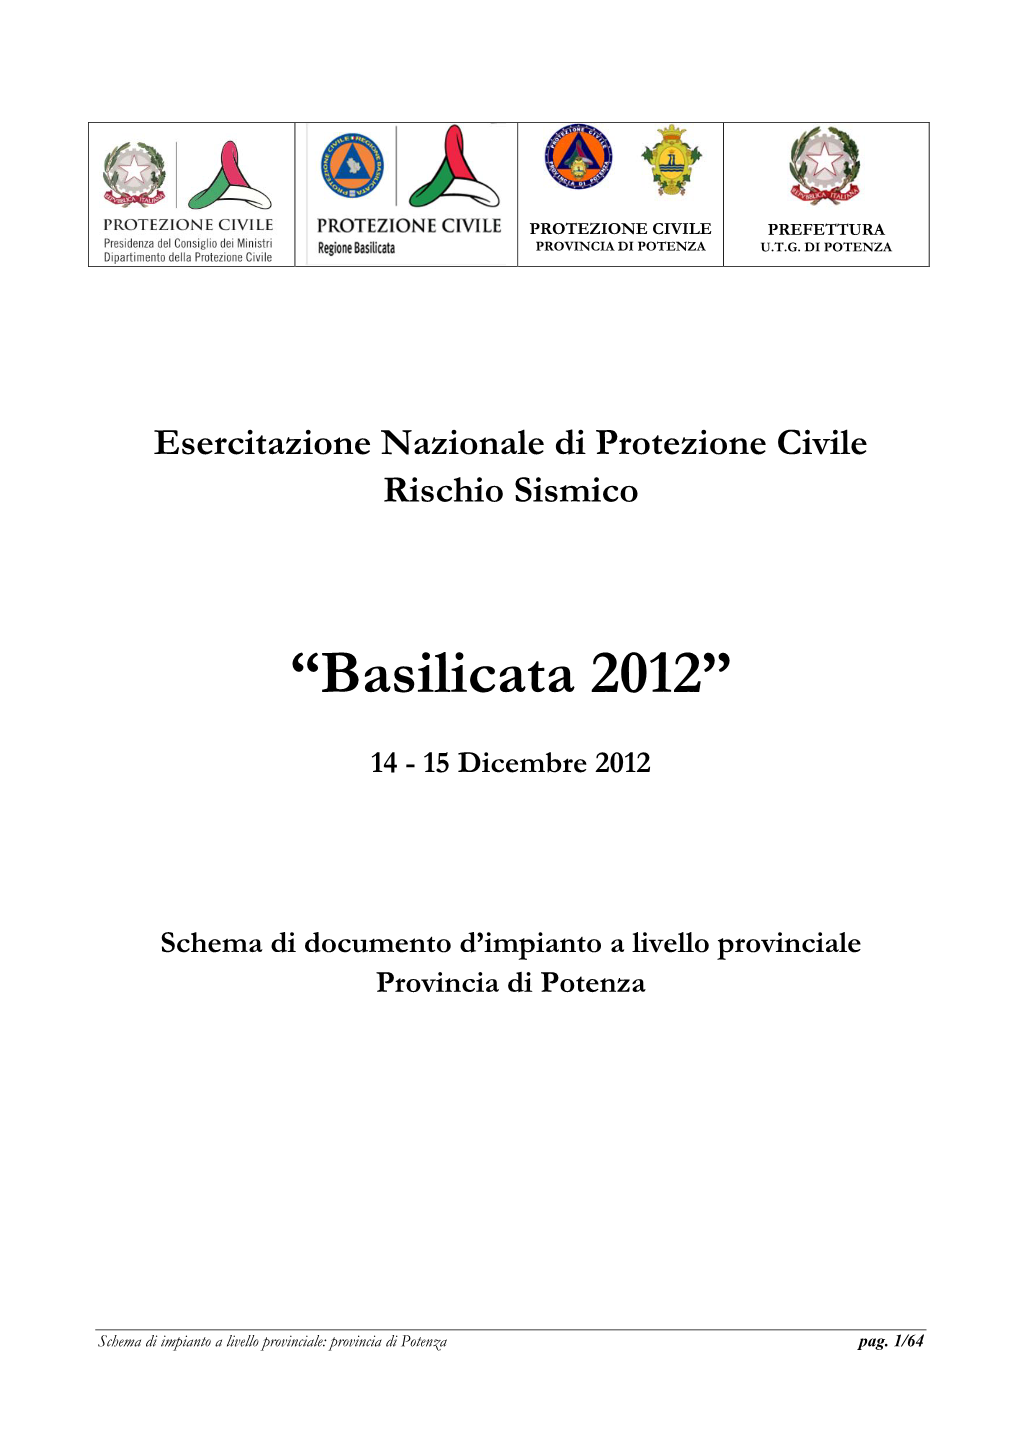 “Basilicata 2012”